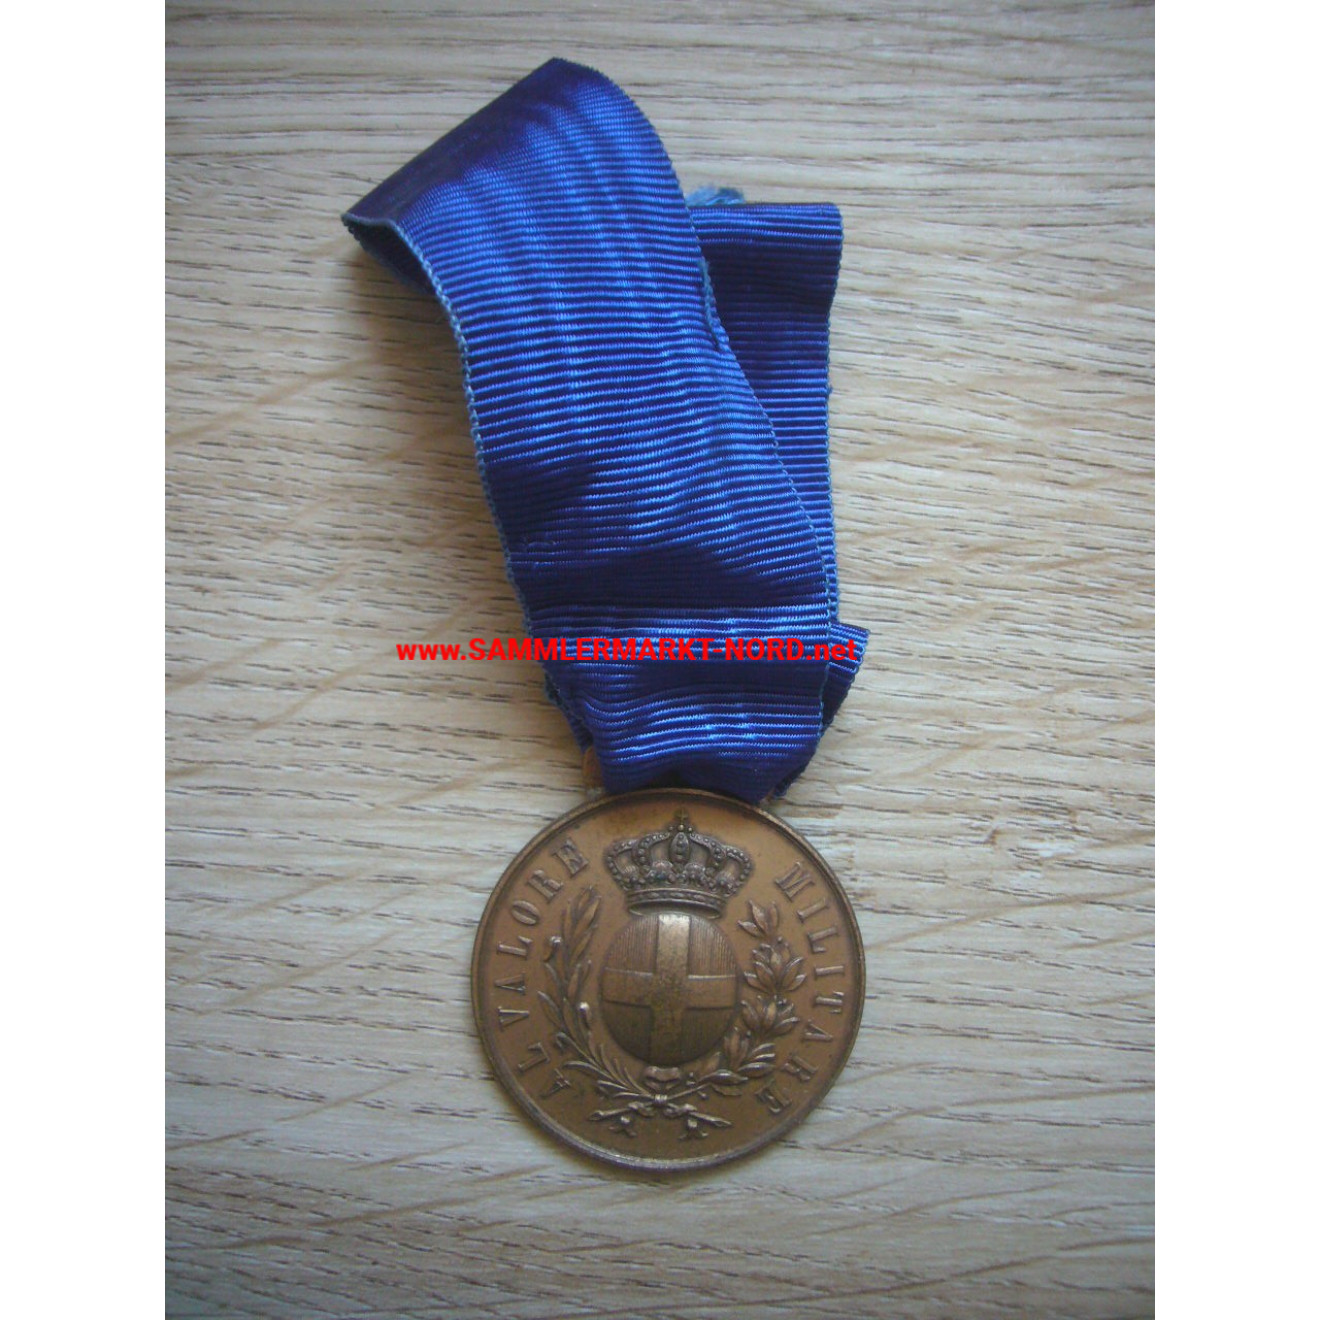 Italy - Medal of Valour "Al Valore Militare" in bronze